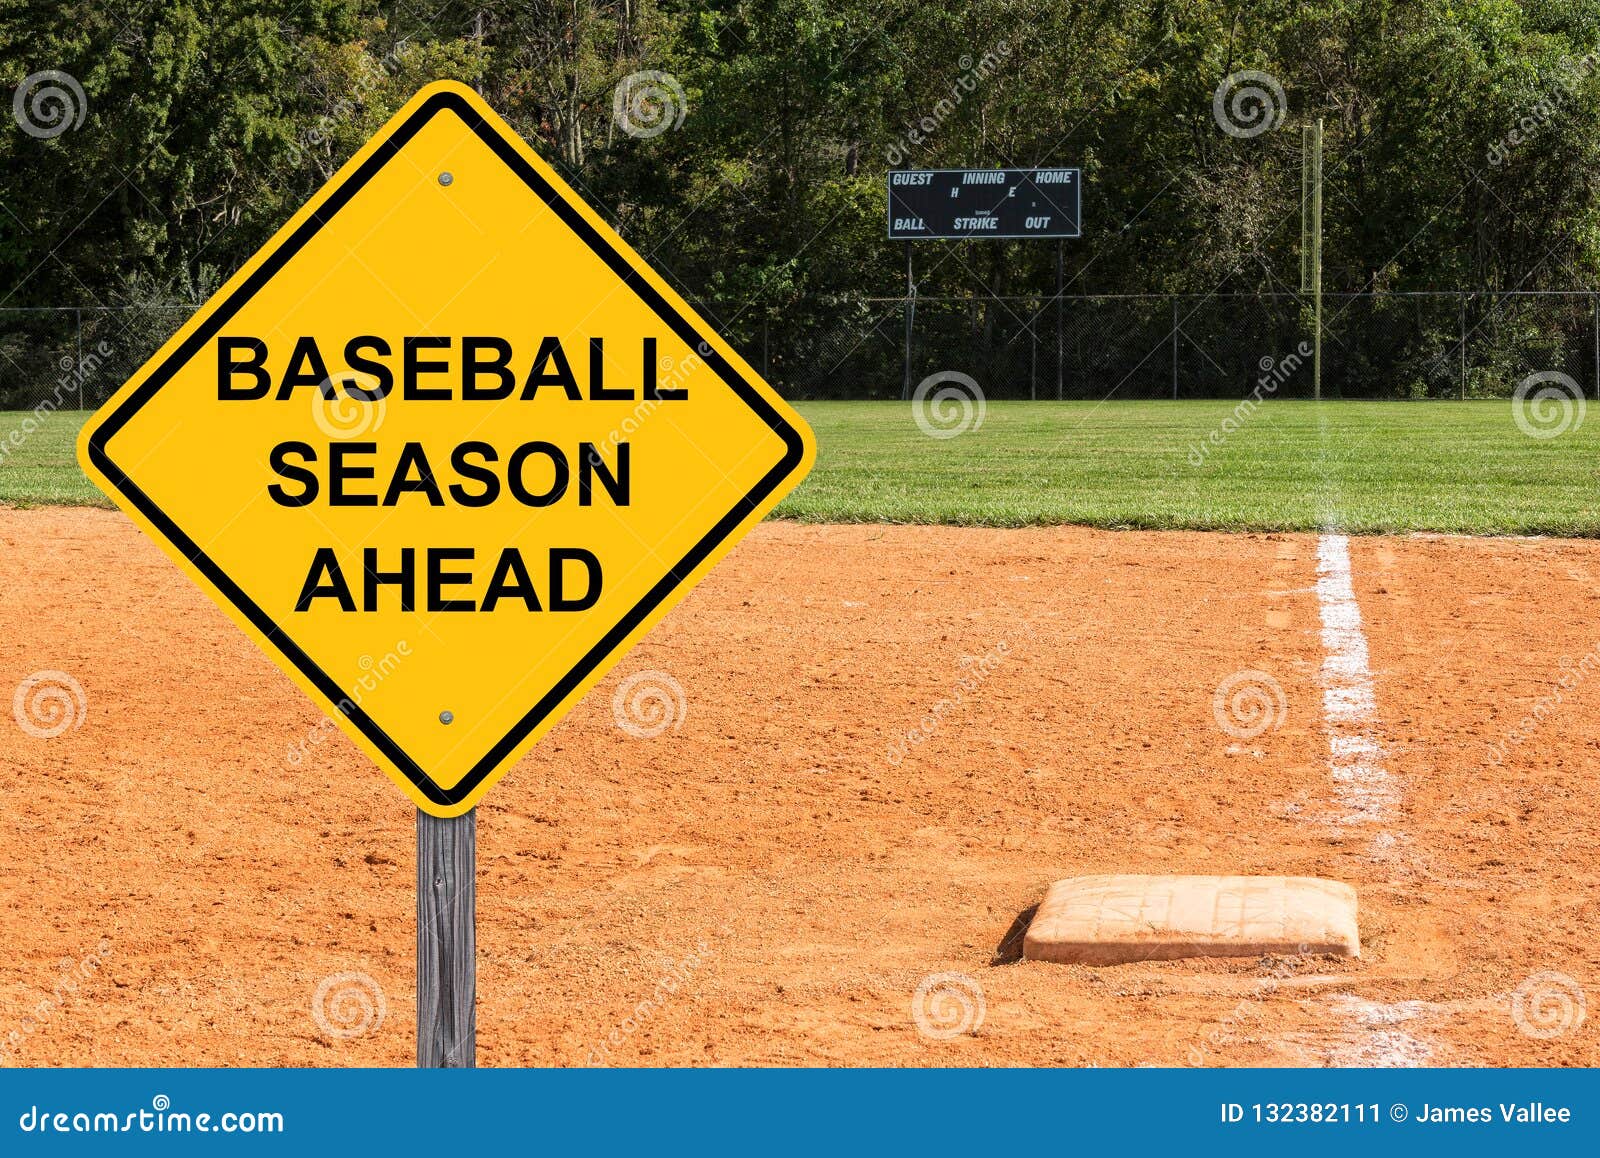 Baseball Season Ahead Sign stock image. Image of background 132382111